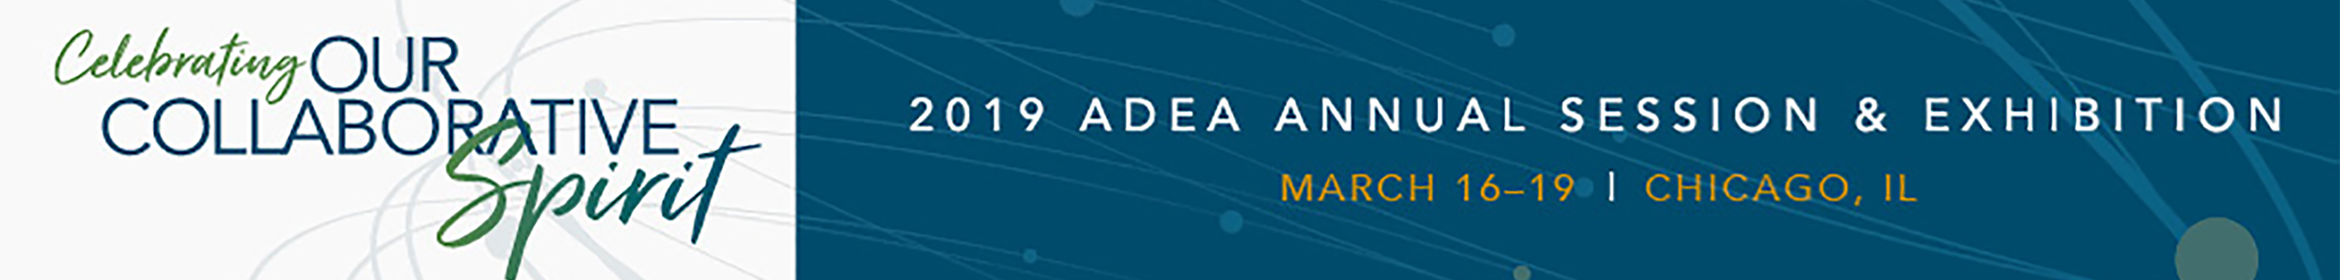 2019 ADEA Annual Session & Exhibition Main banner